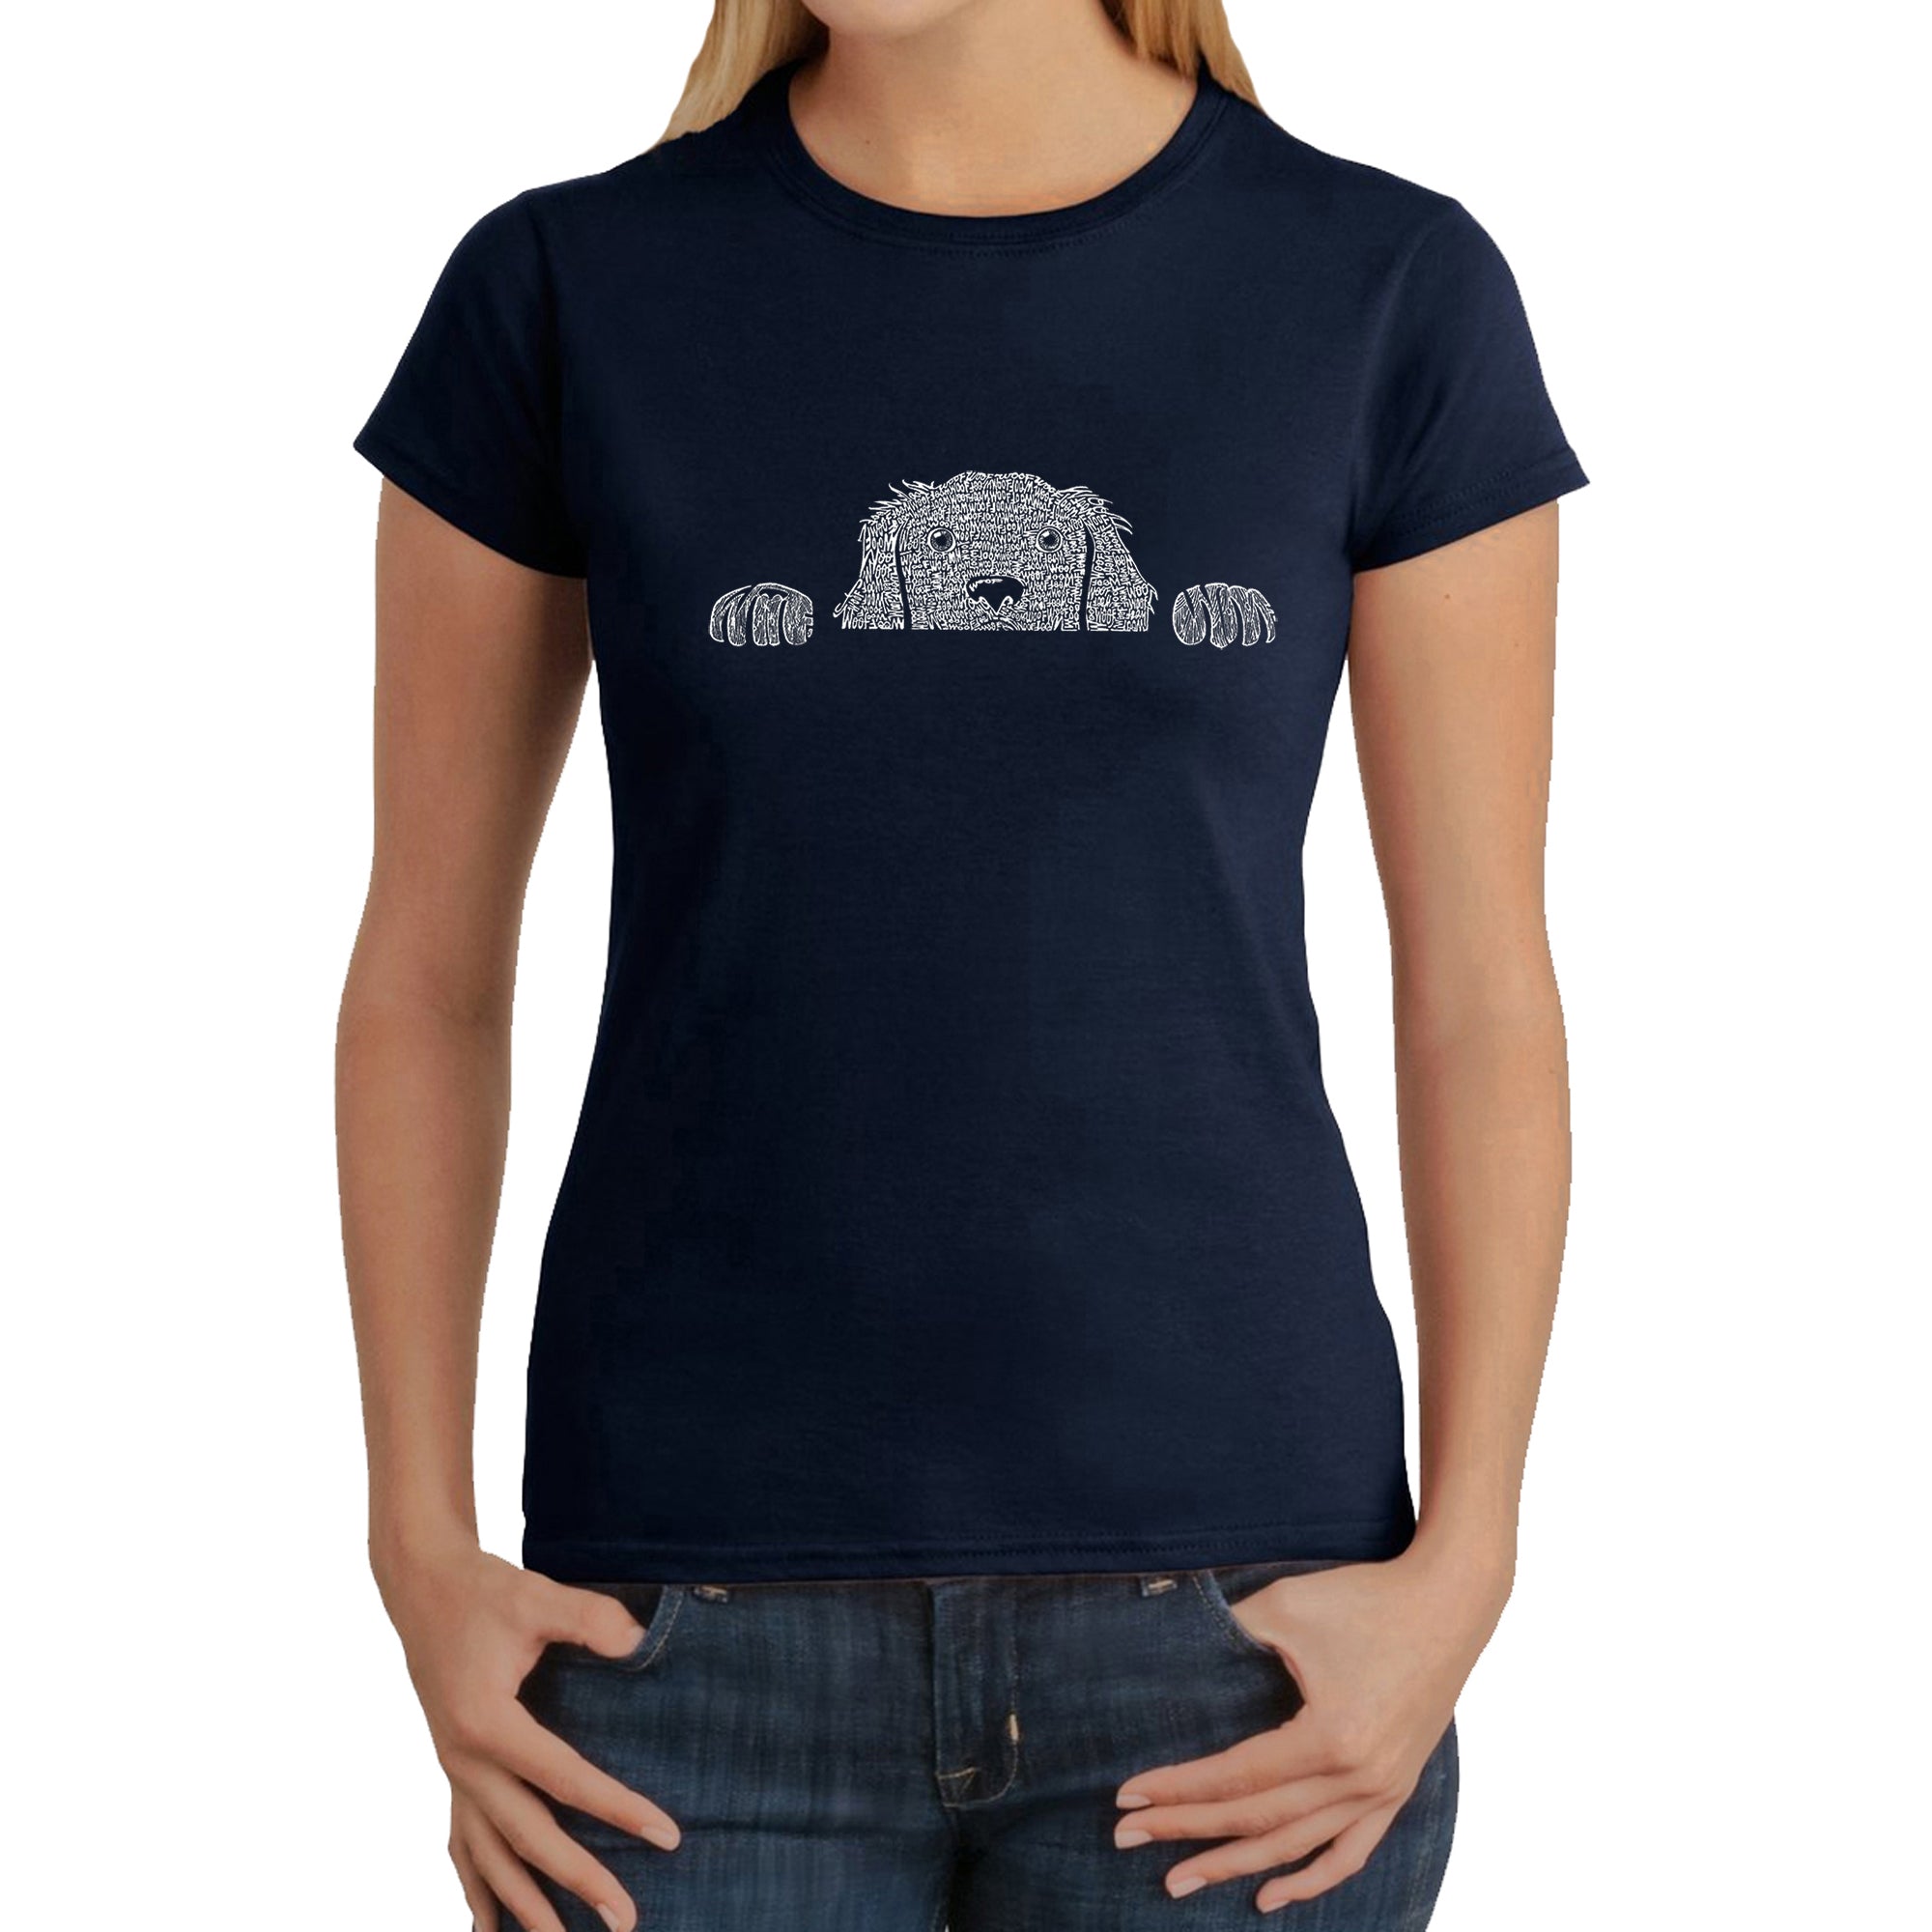 Peeking Dog - Women's Word Art T-Shirt - Navy - X-Large